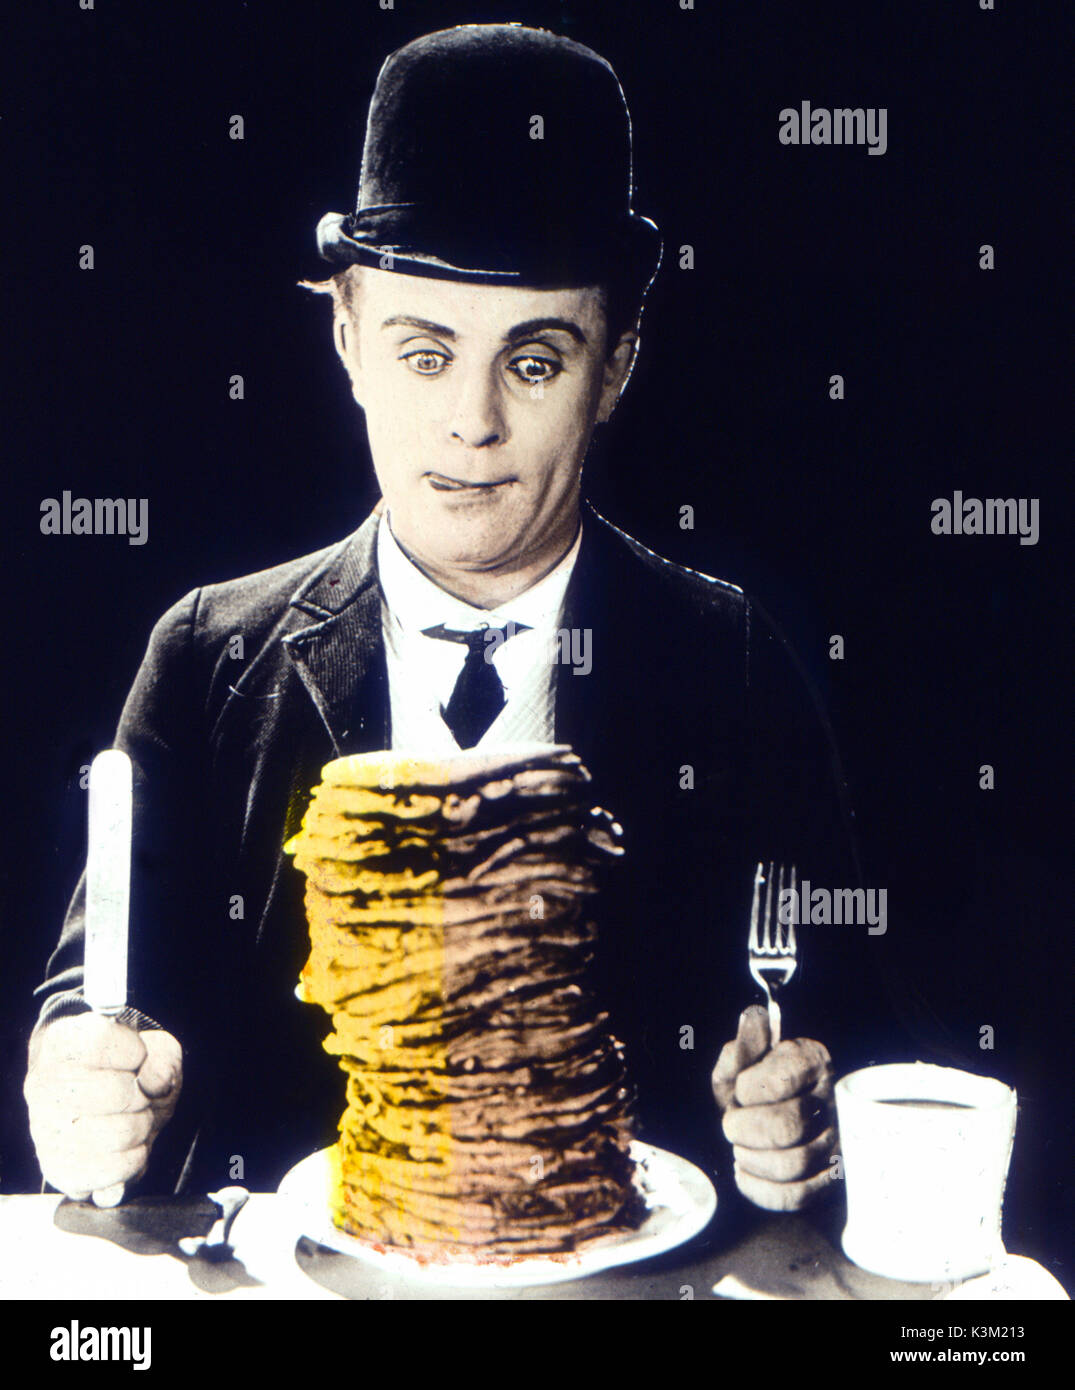 BOBBY VERNON tackles his pancake pile Stock Photo